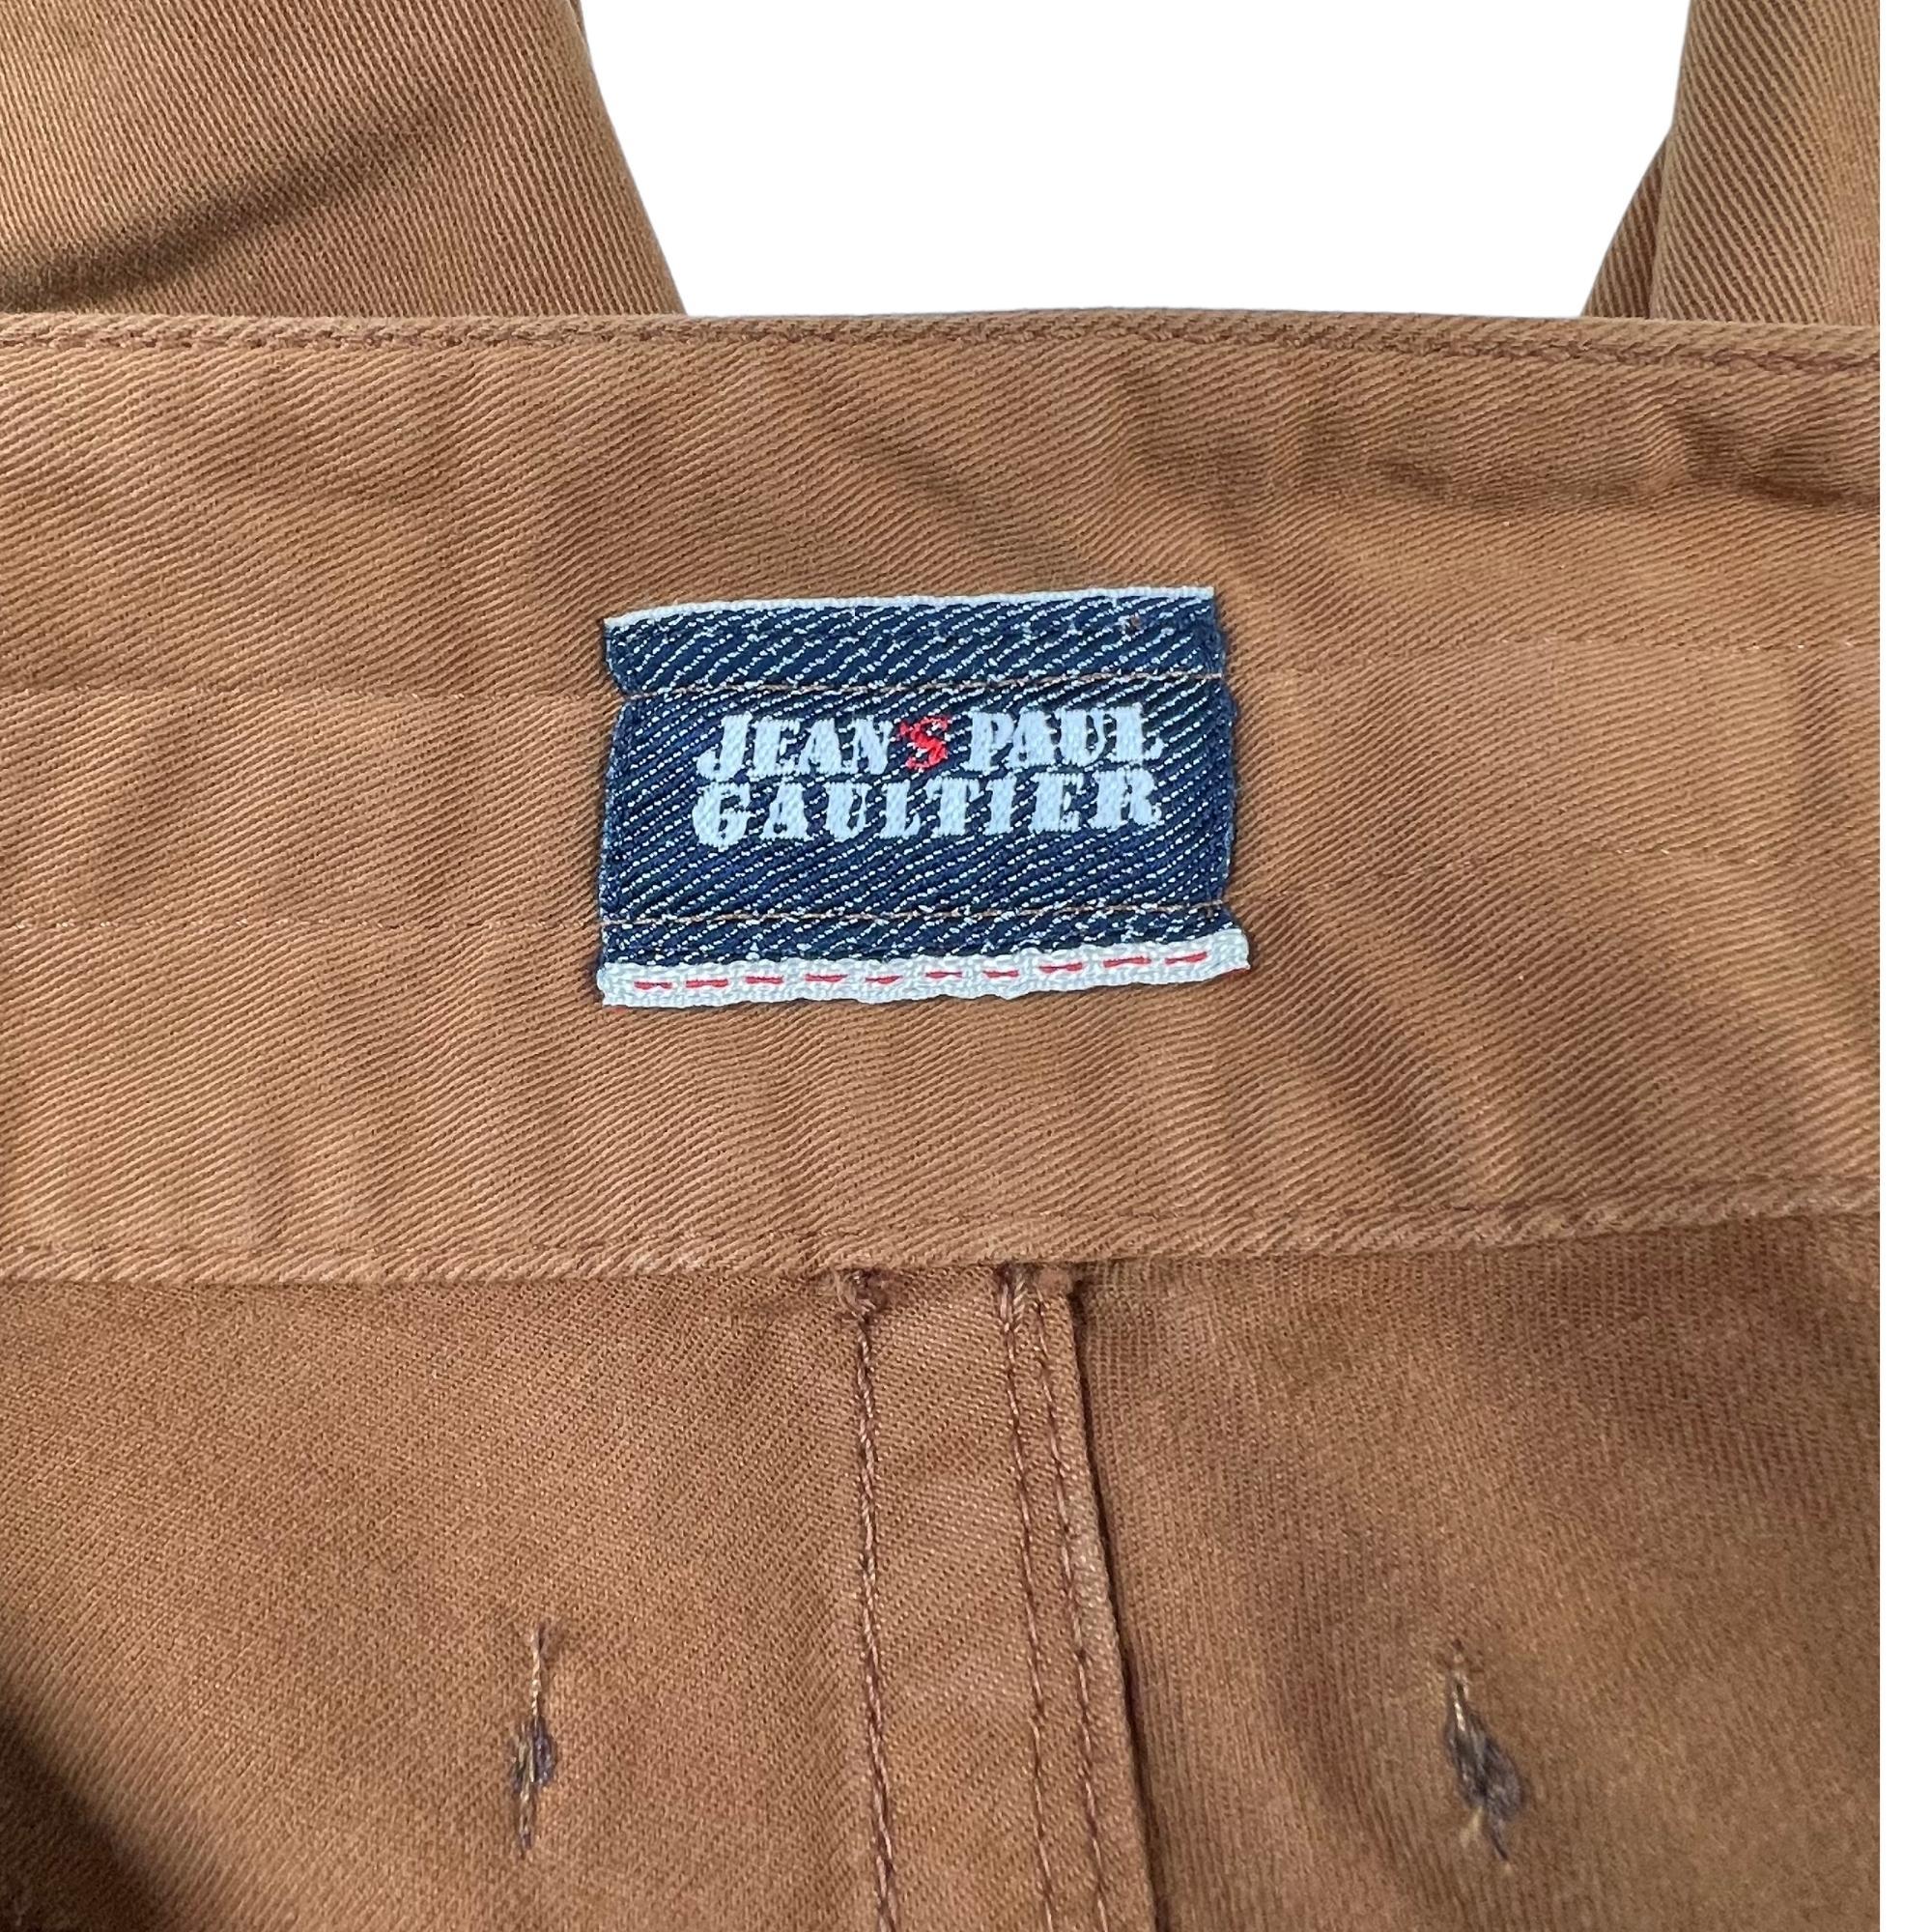 Jean Paul Gaultier Fringe Rust Pant (Size 28) For Sale 1